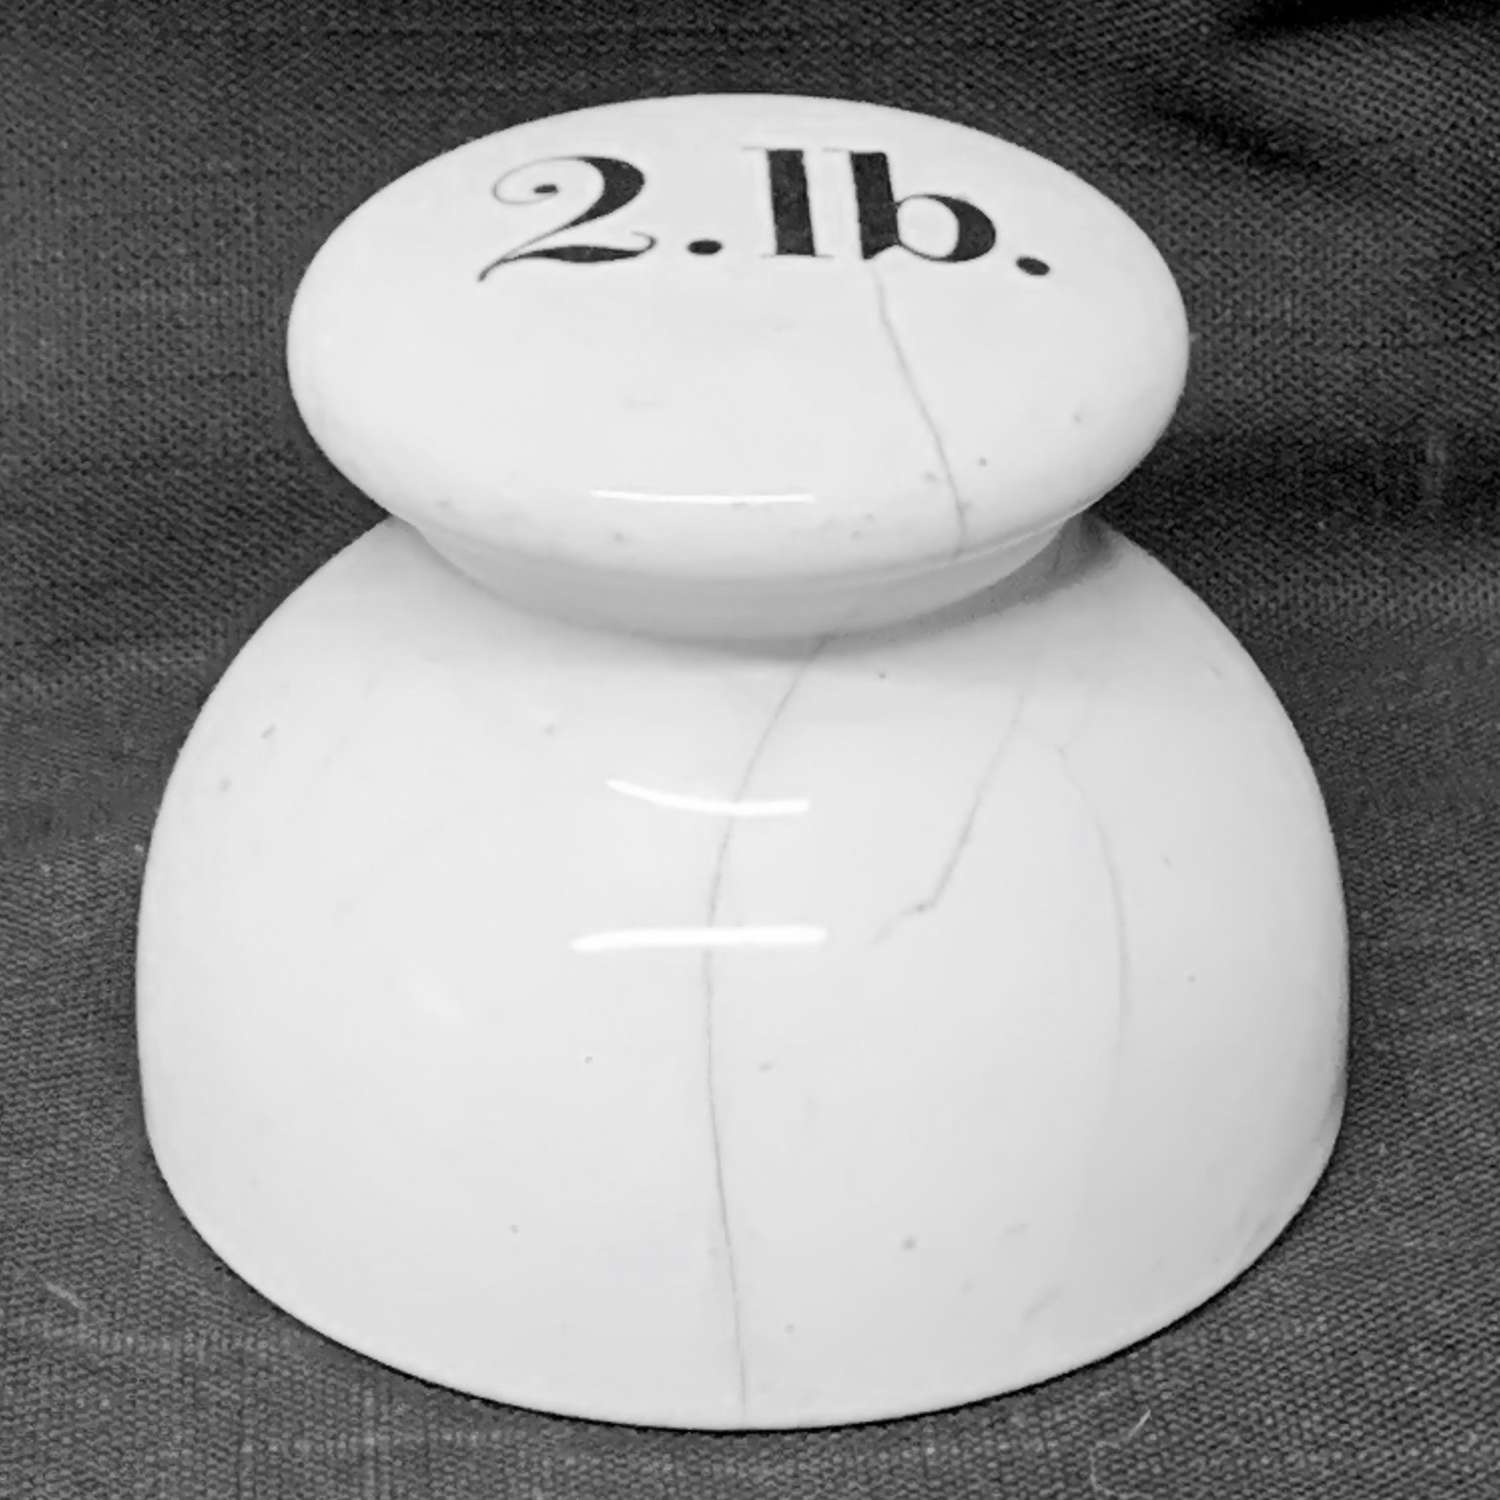 Ictorian Ceramic Porcelain 2 Pound Scale Weight c1890